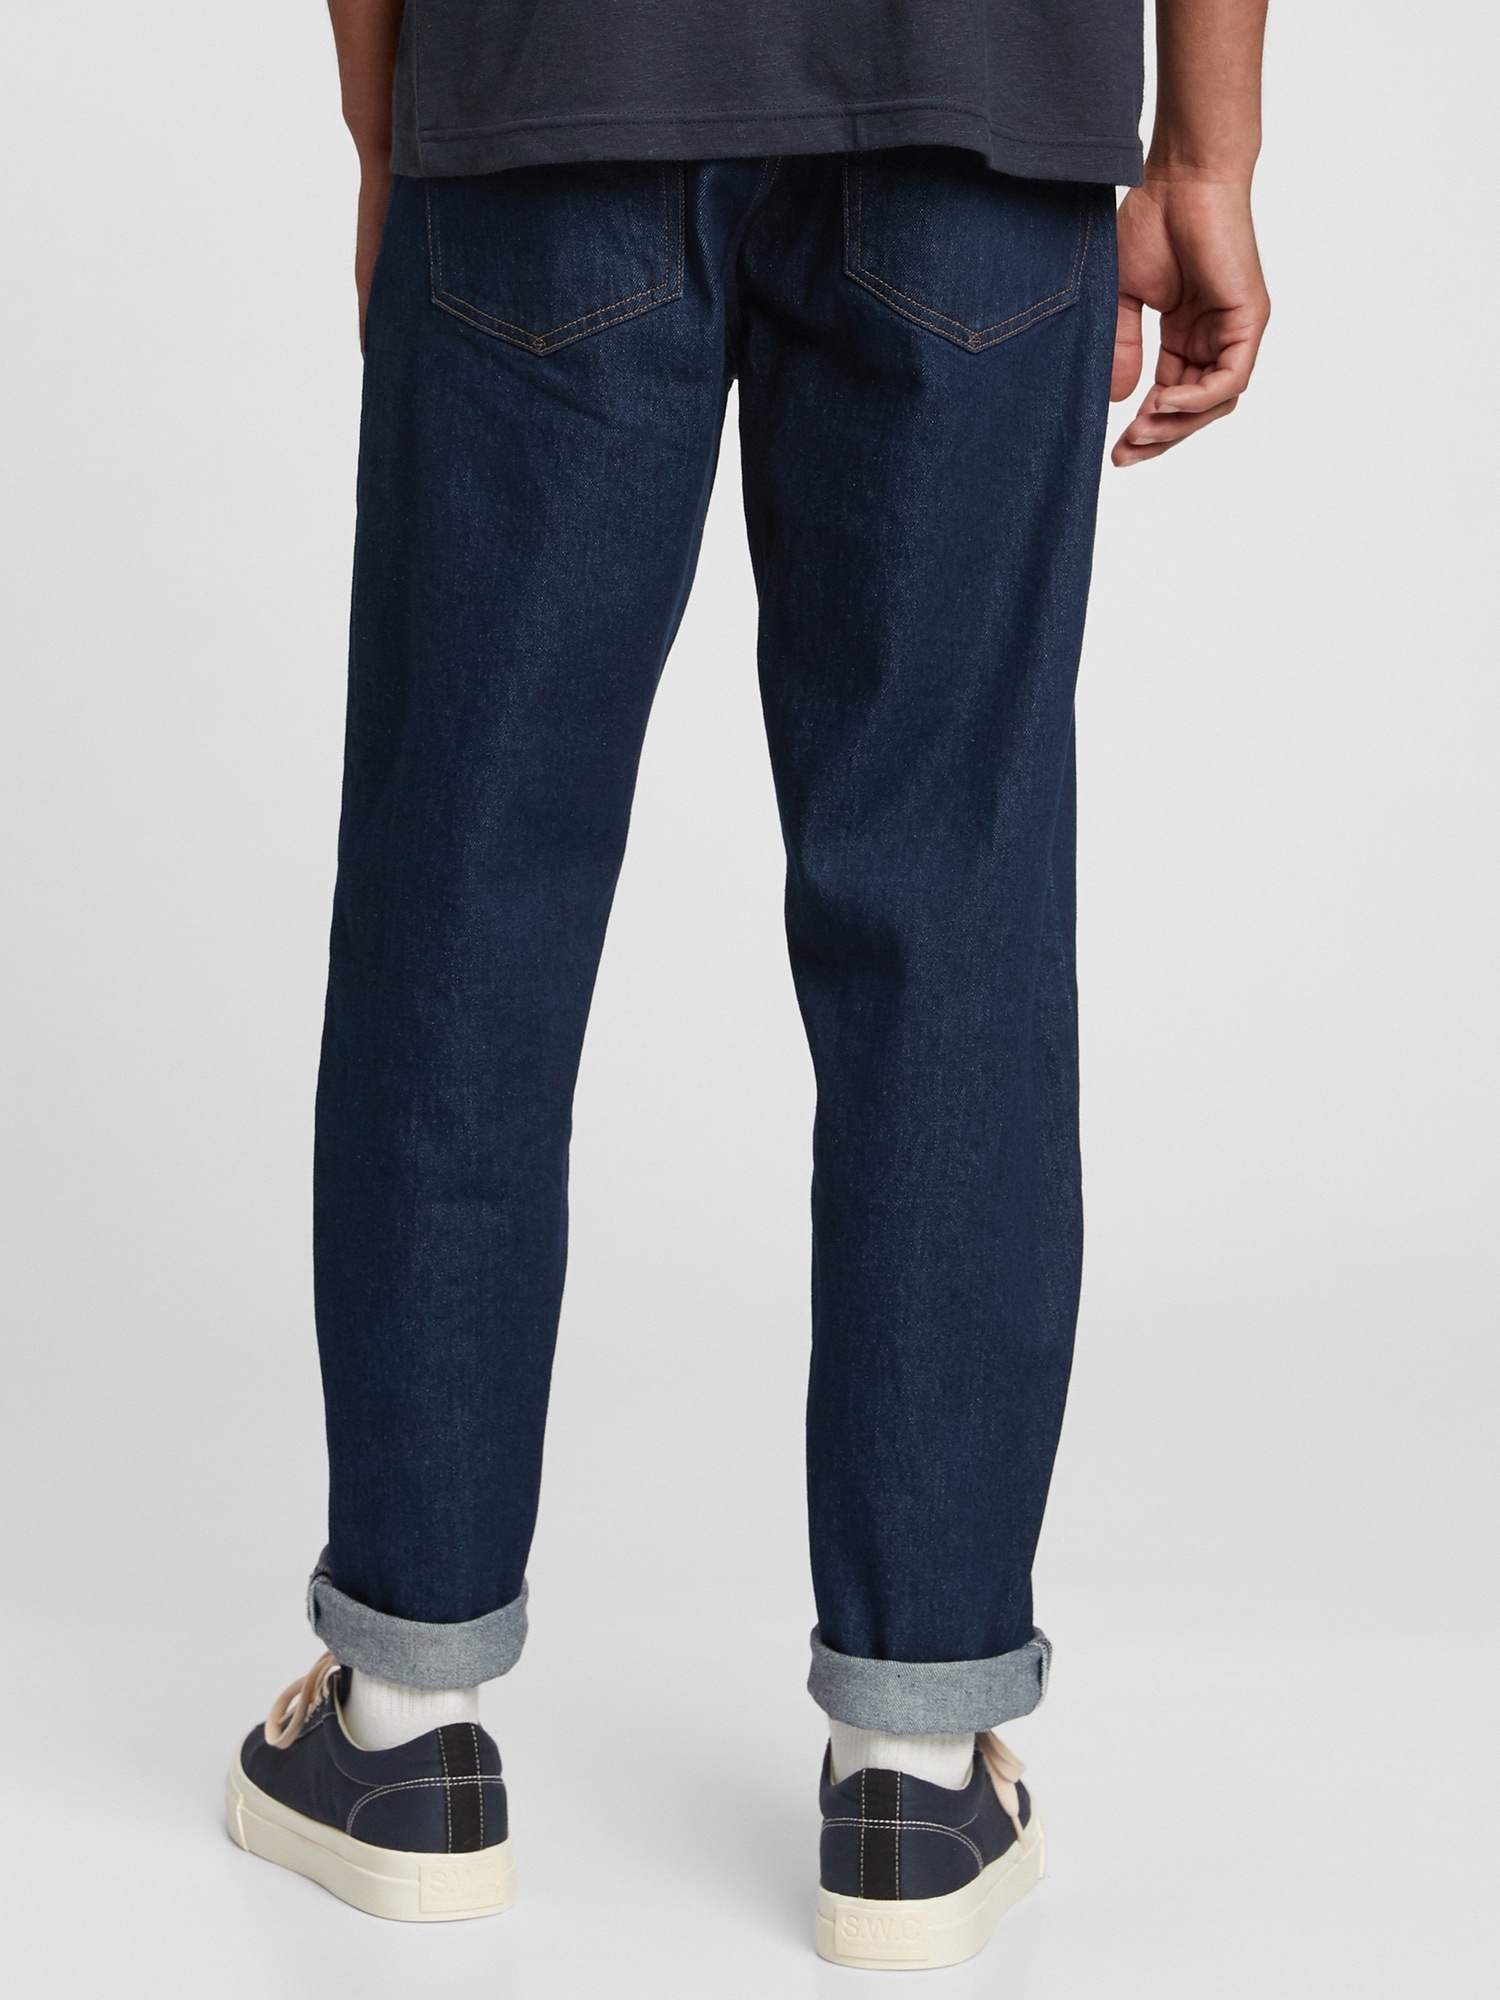 New with Tags* Gap Soft Wear Slim Taper Jeans / Denim size 32 x 32